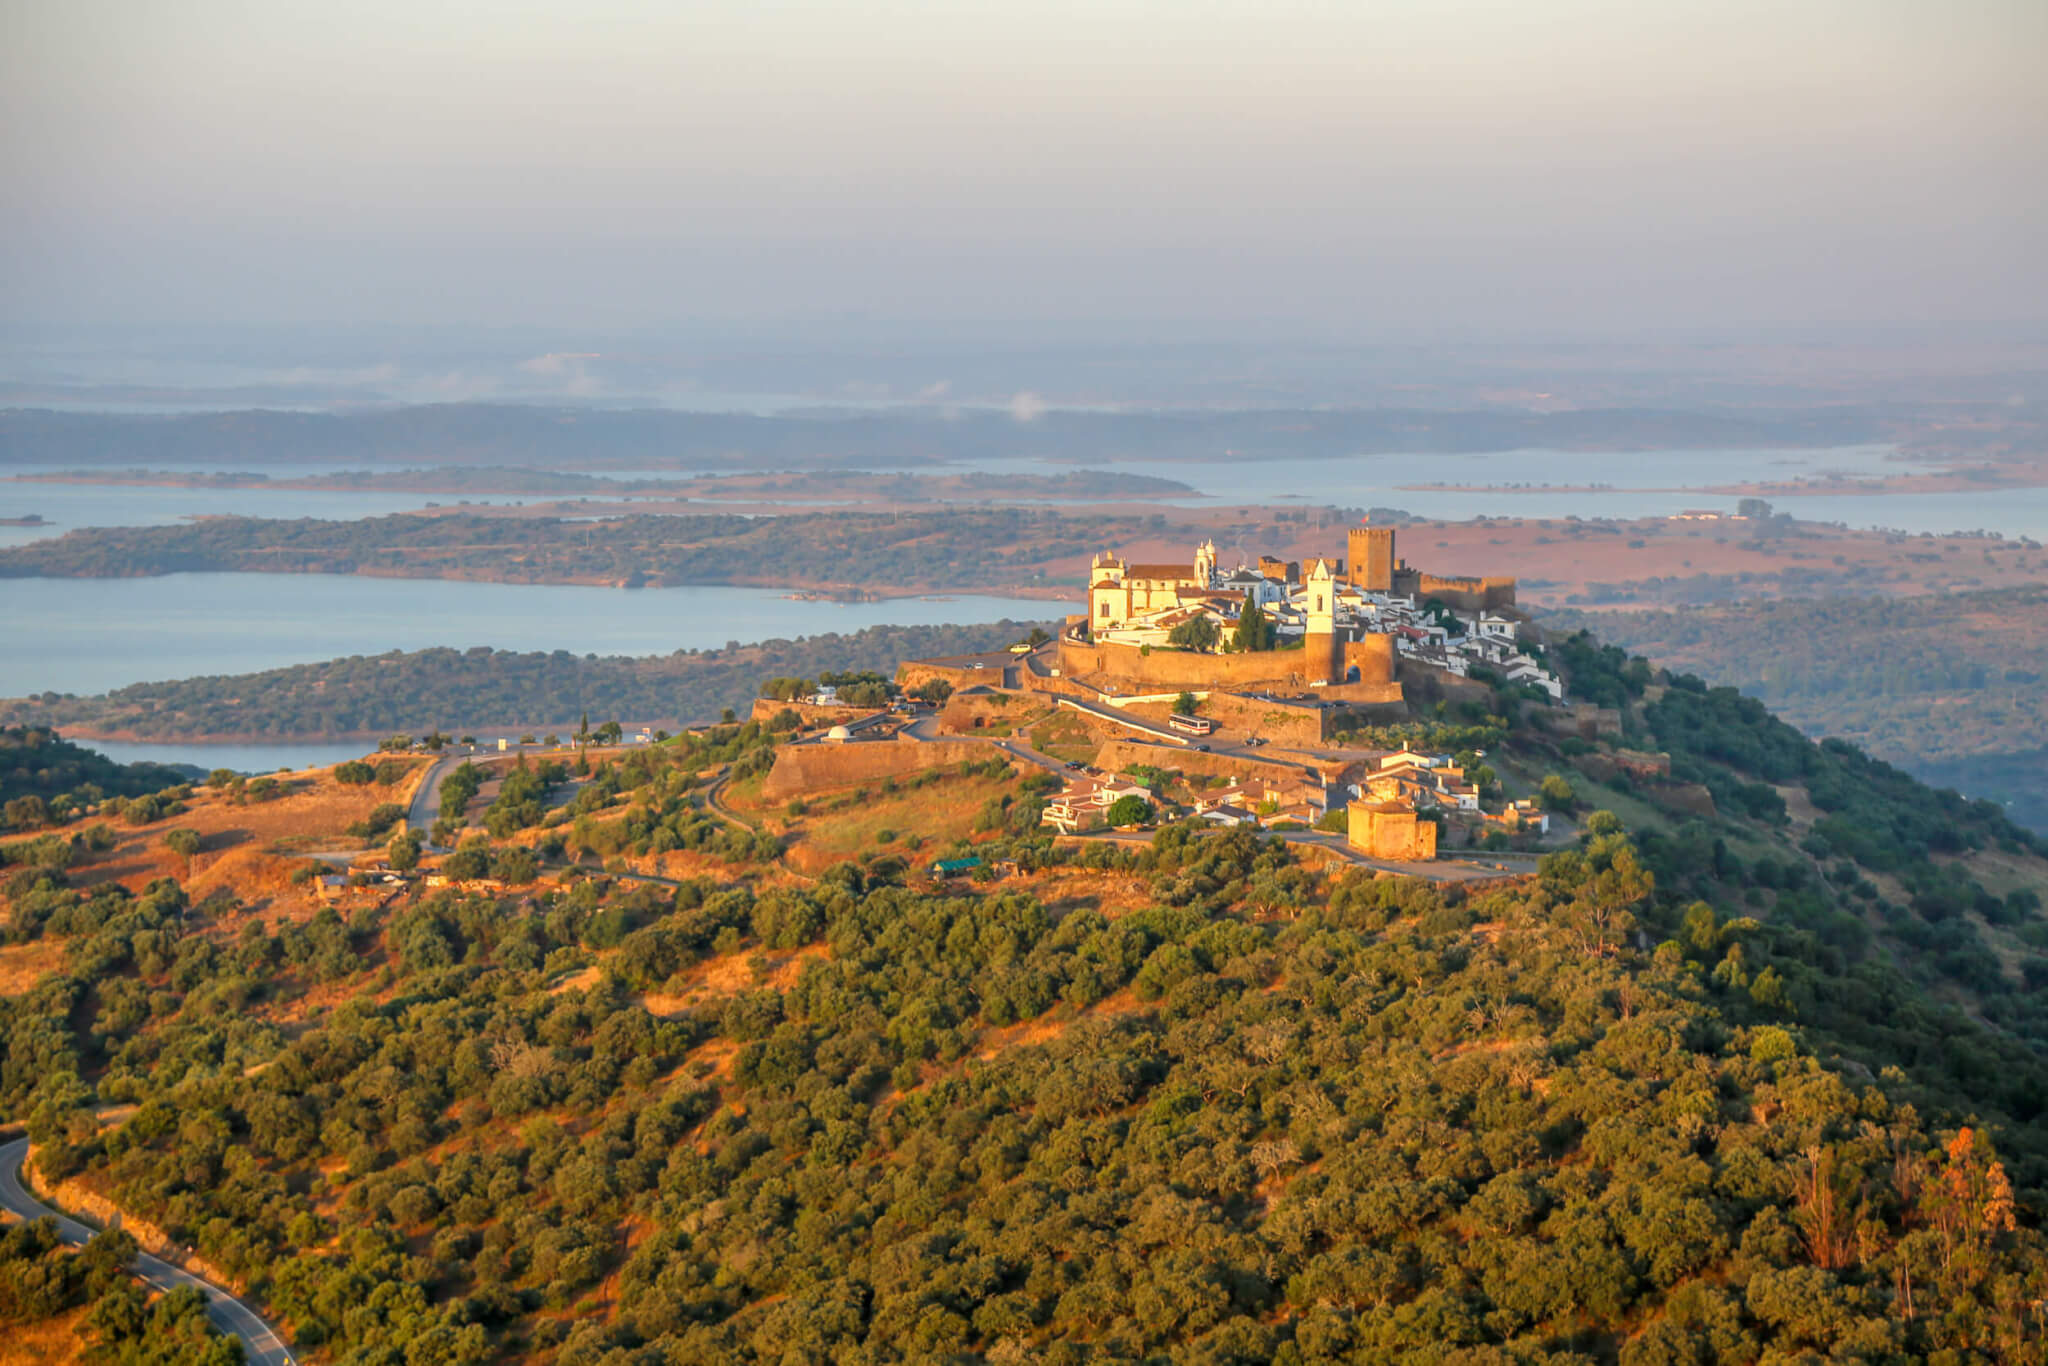 Castelo do Monsaraz from the air